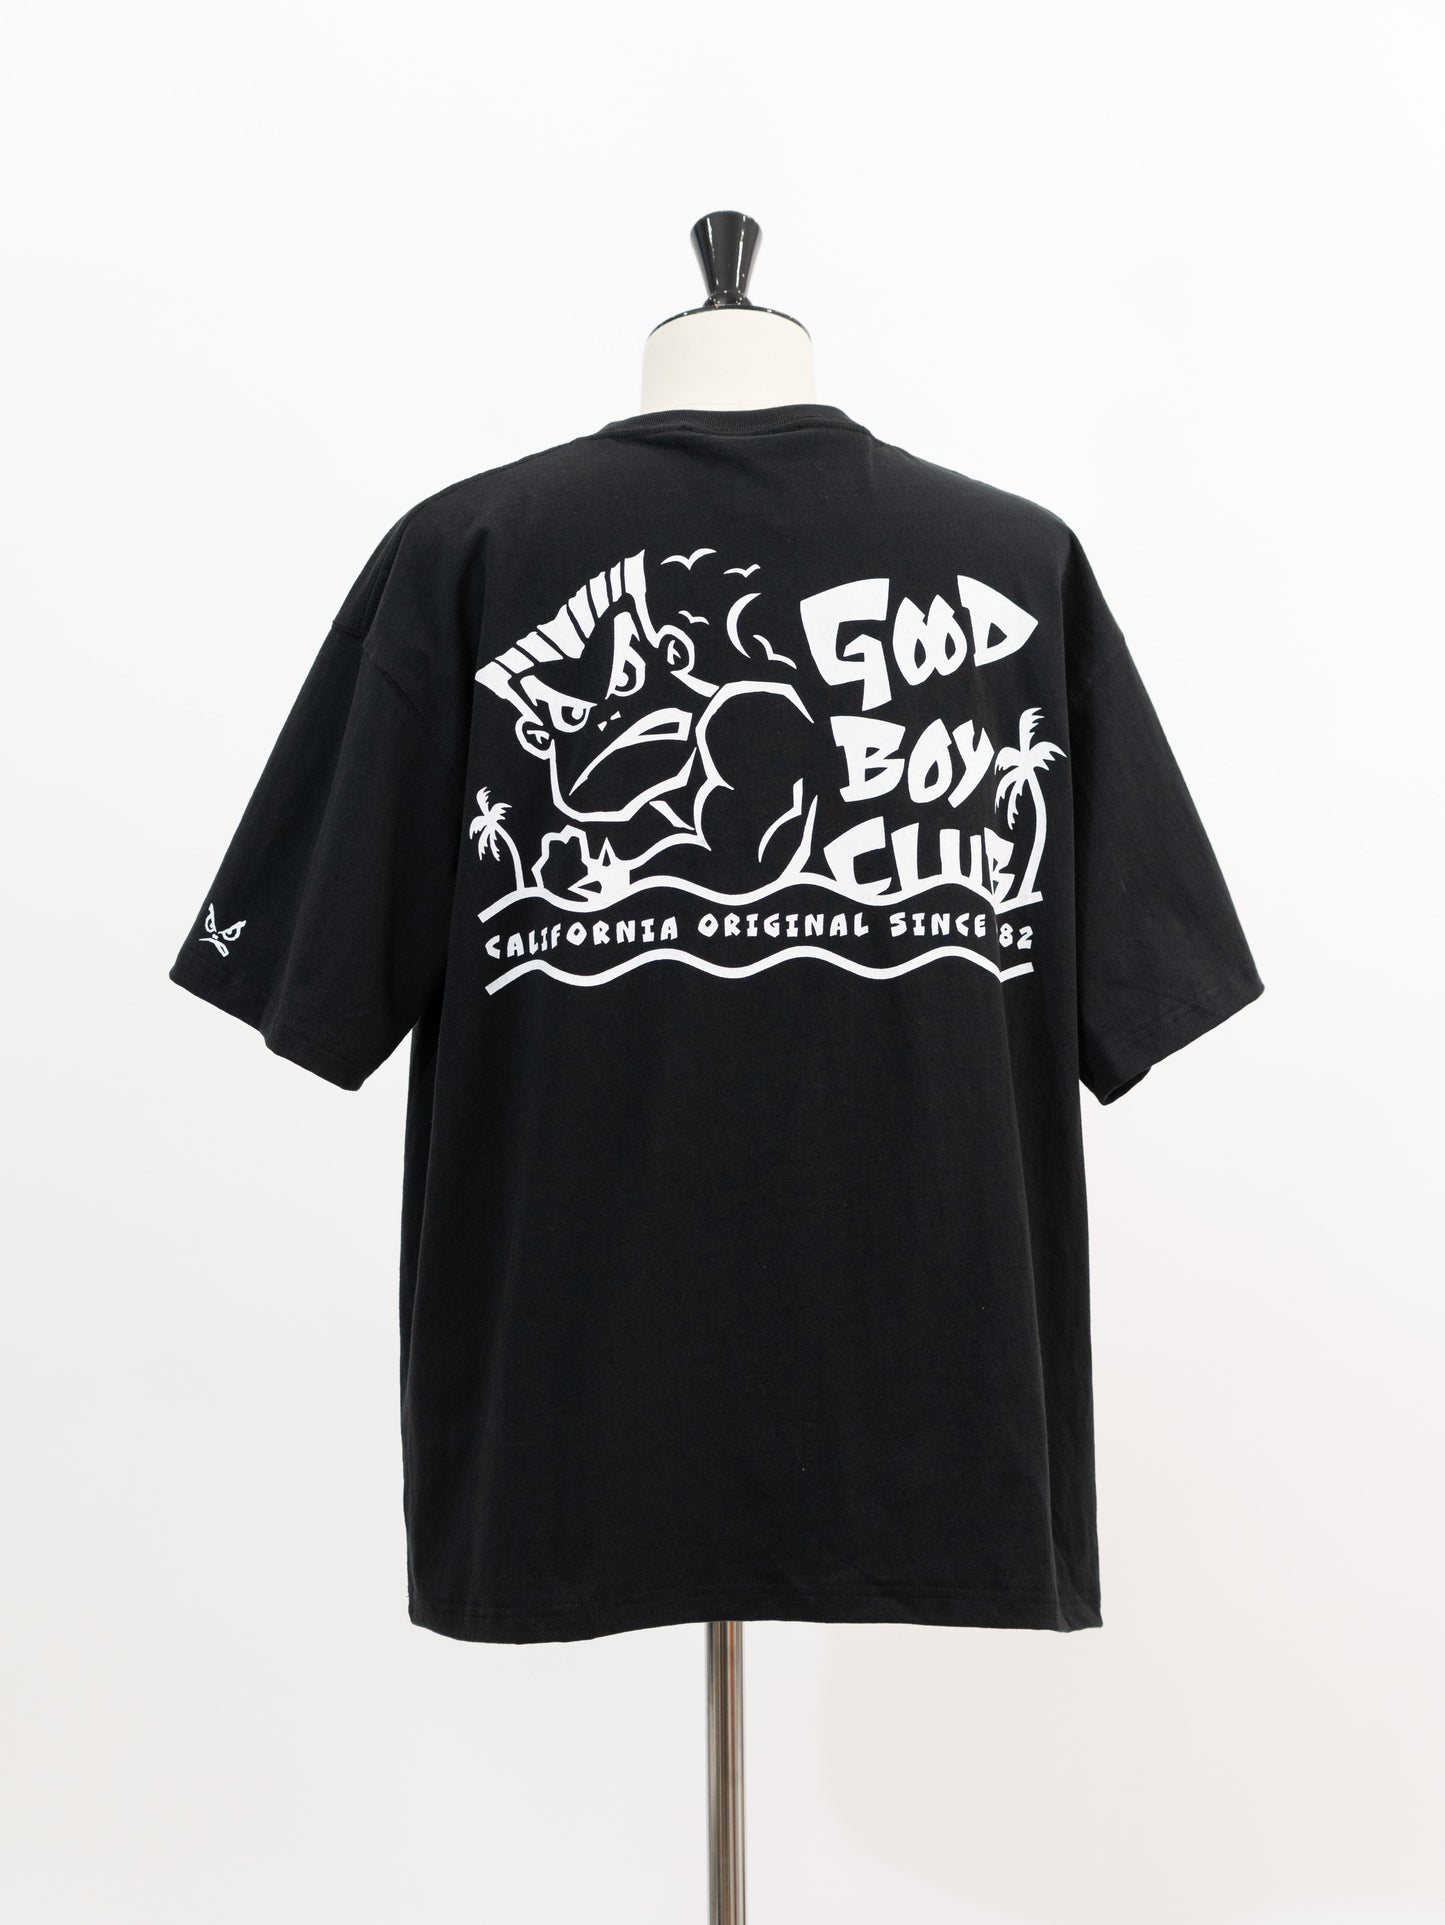 × BAD BOY / Goodboy Swim Tee - BLACK